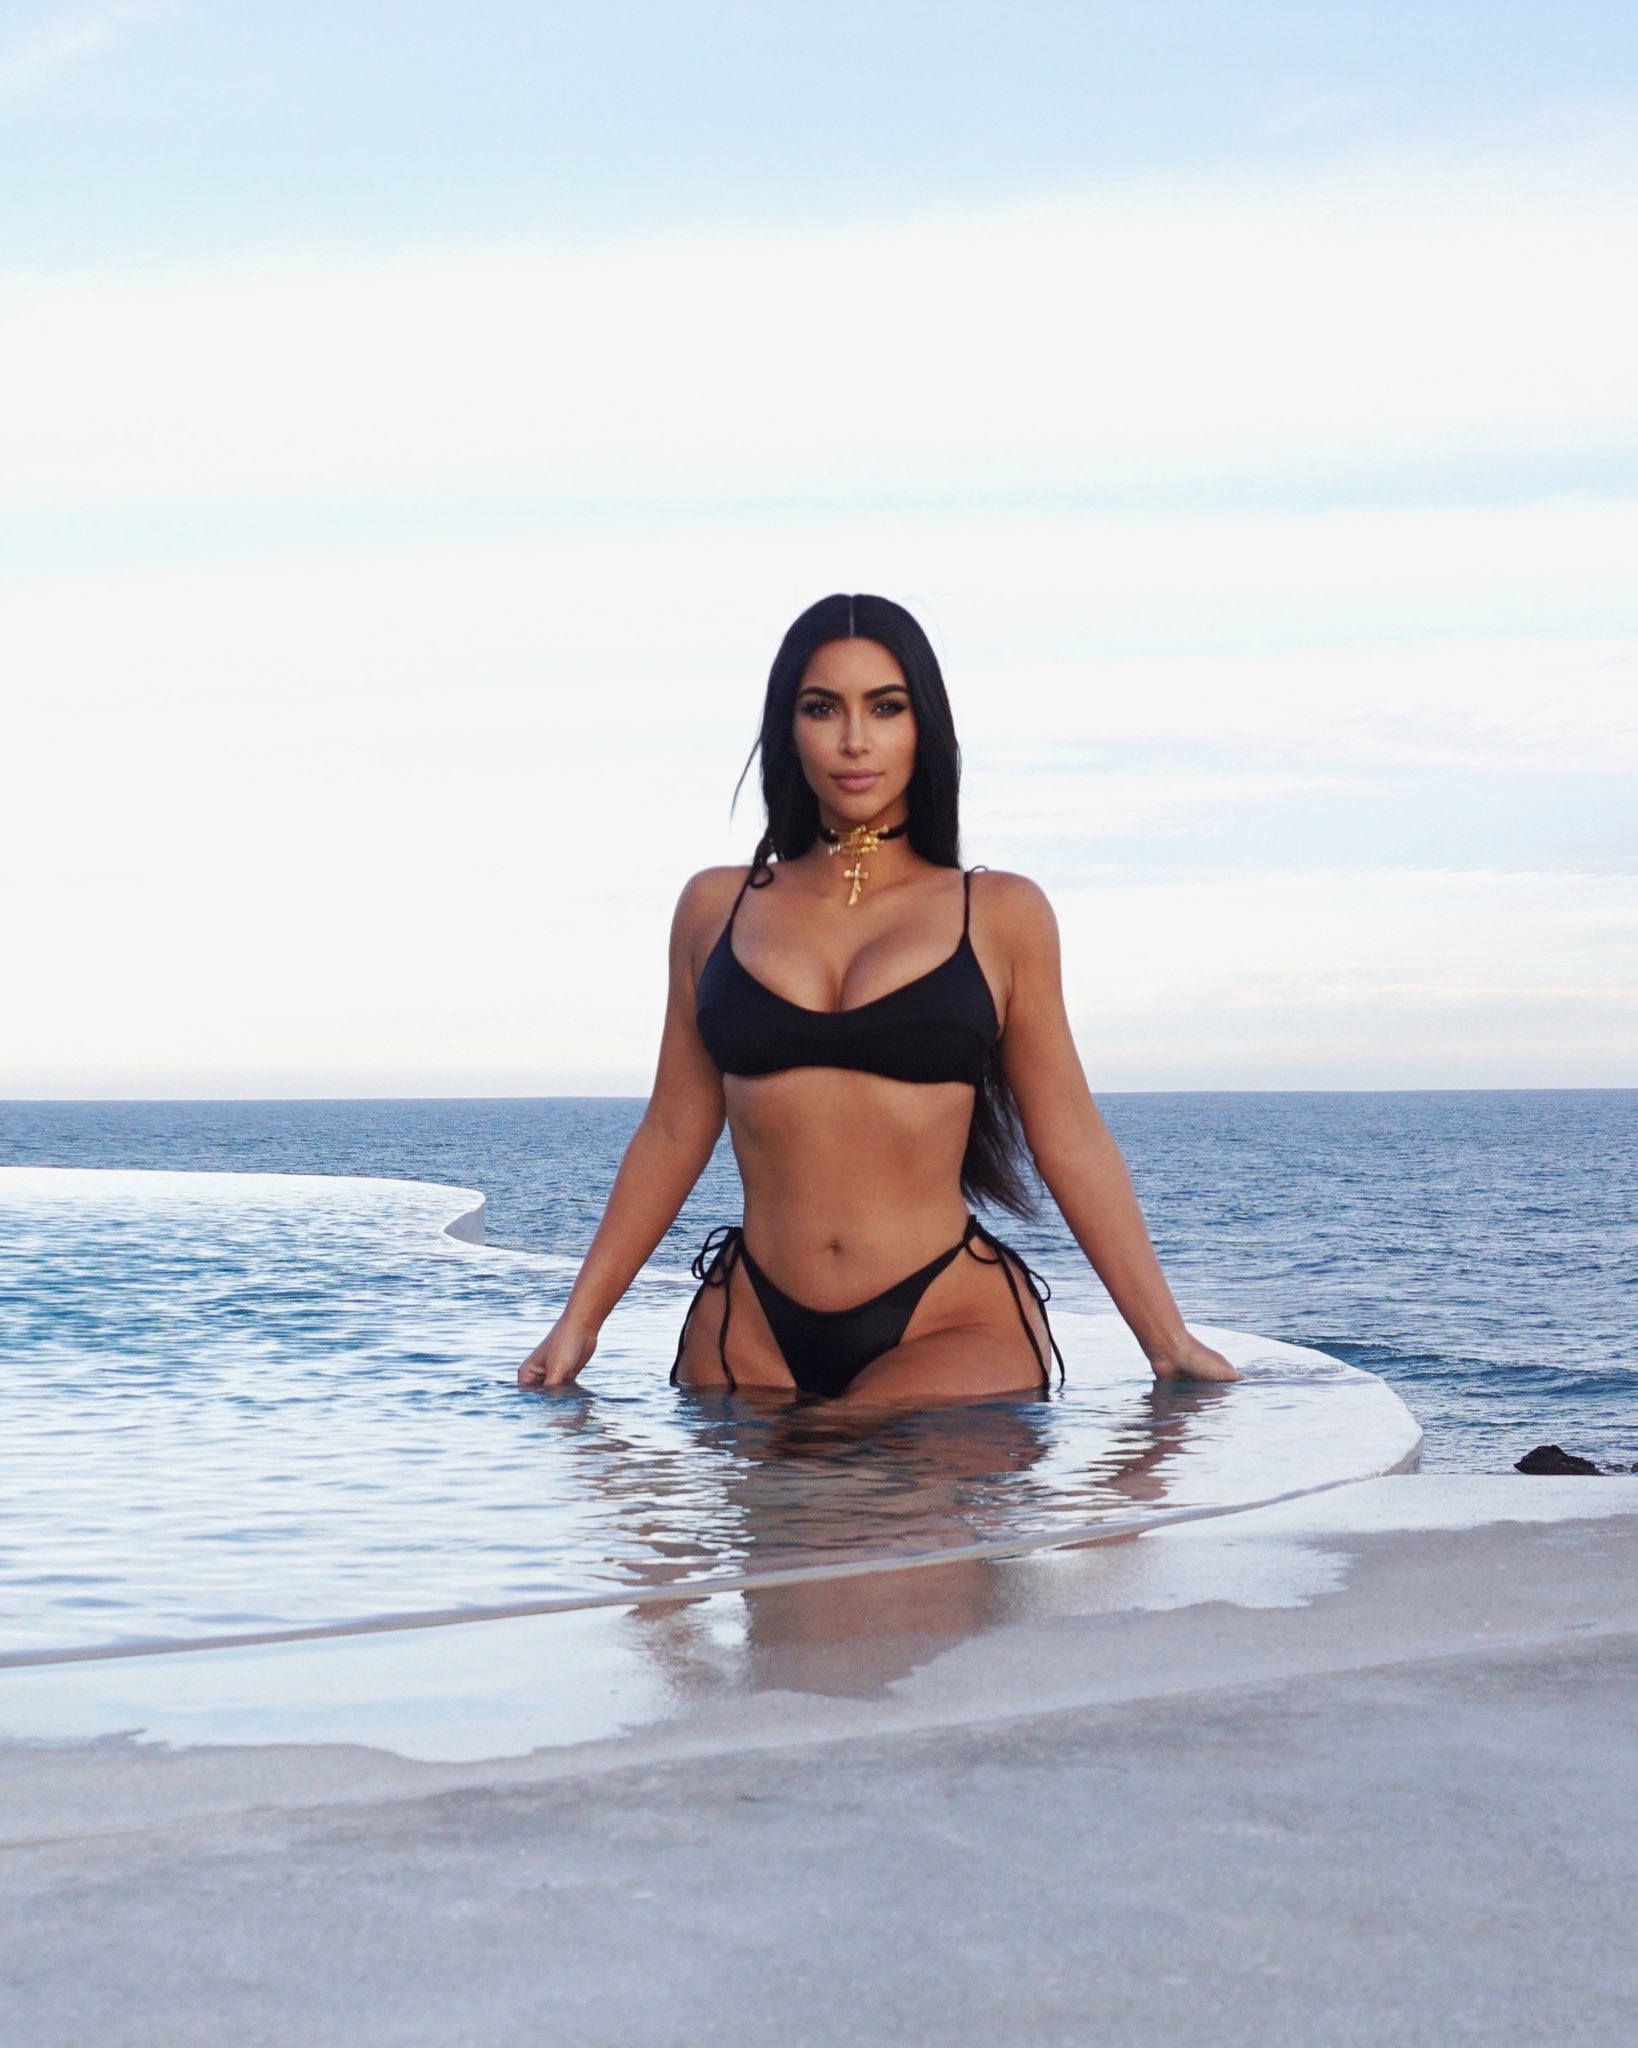 Photos n°2 : Kim Kardashian’s Vacation Snaps